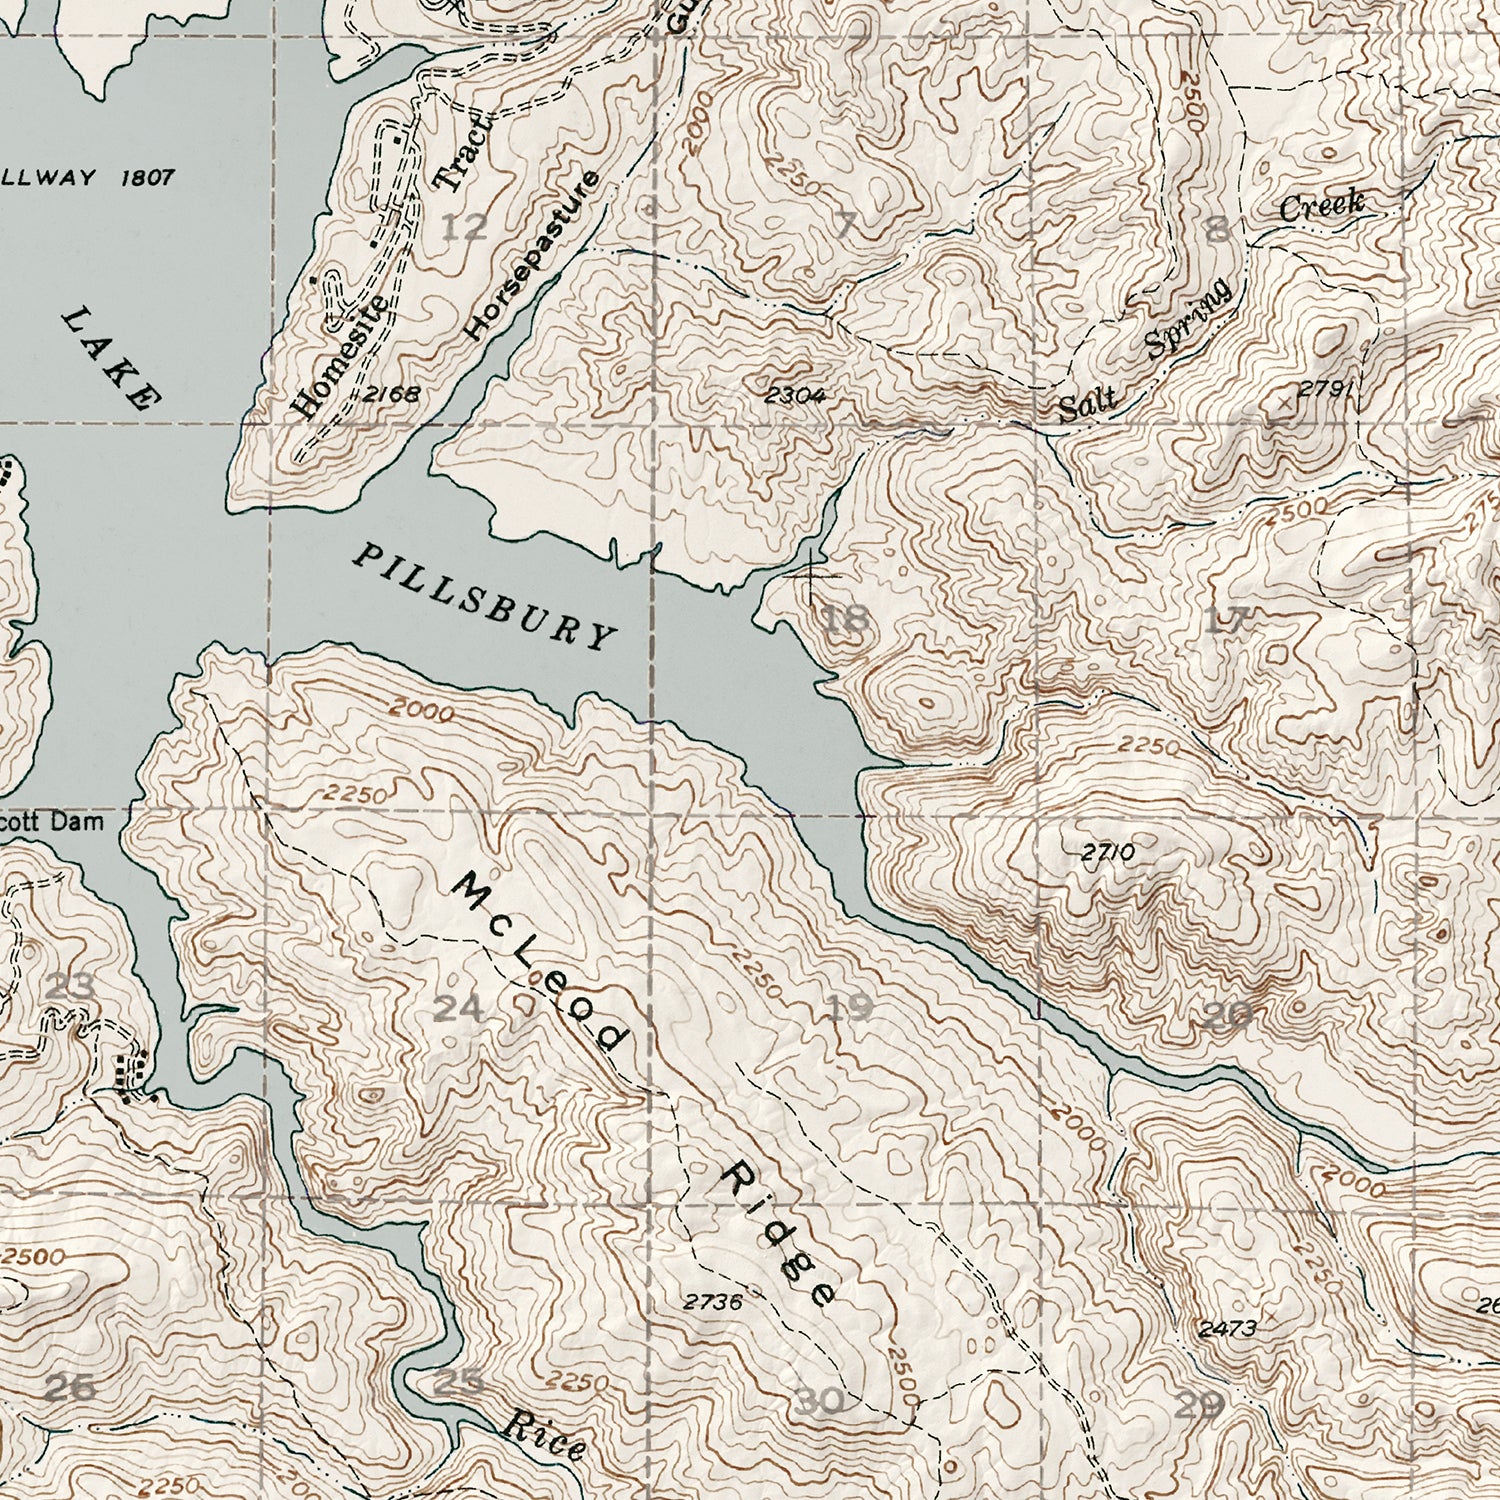 Lake Pillsbury, CA - Vintage Shaded Relief Map (1951)